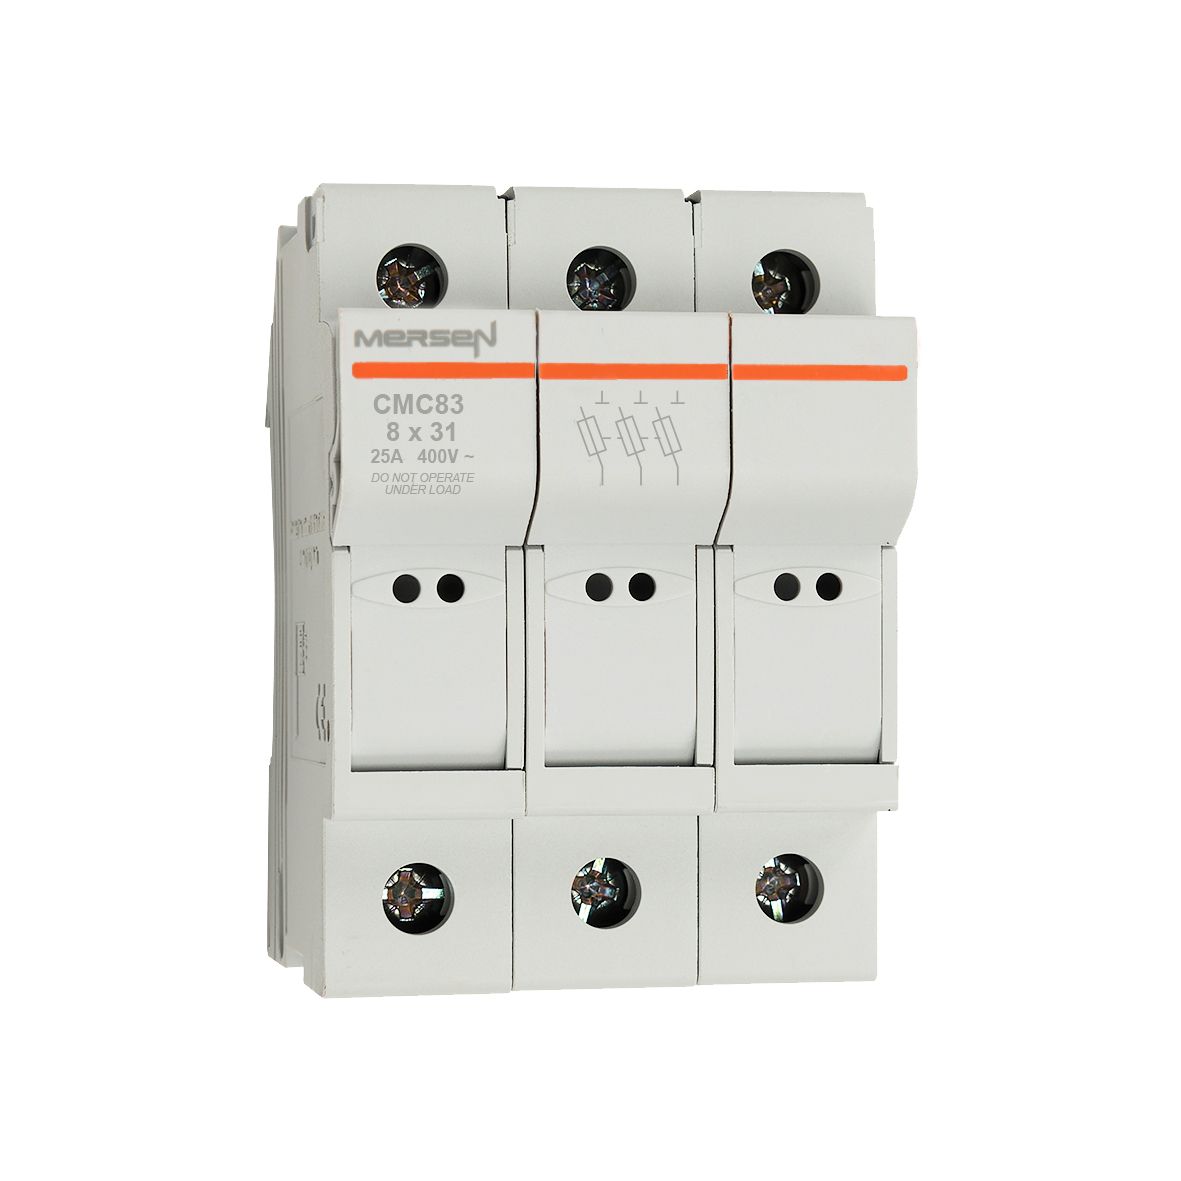 M1062680 - CMC8 modular fuse holder, IEC, 3P, 8x32, DIN rail mounting, IP20